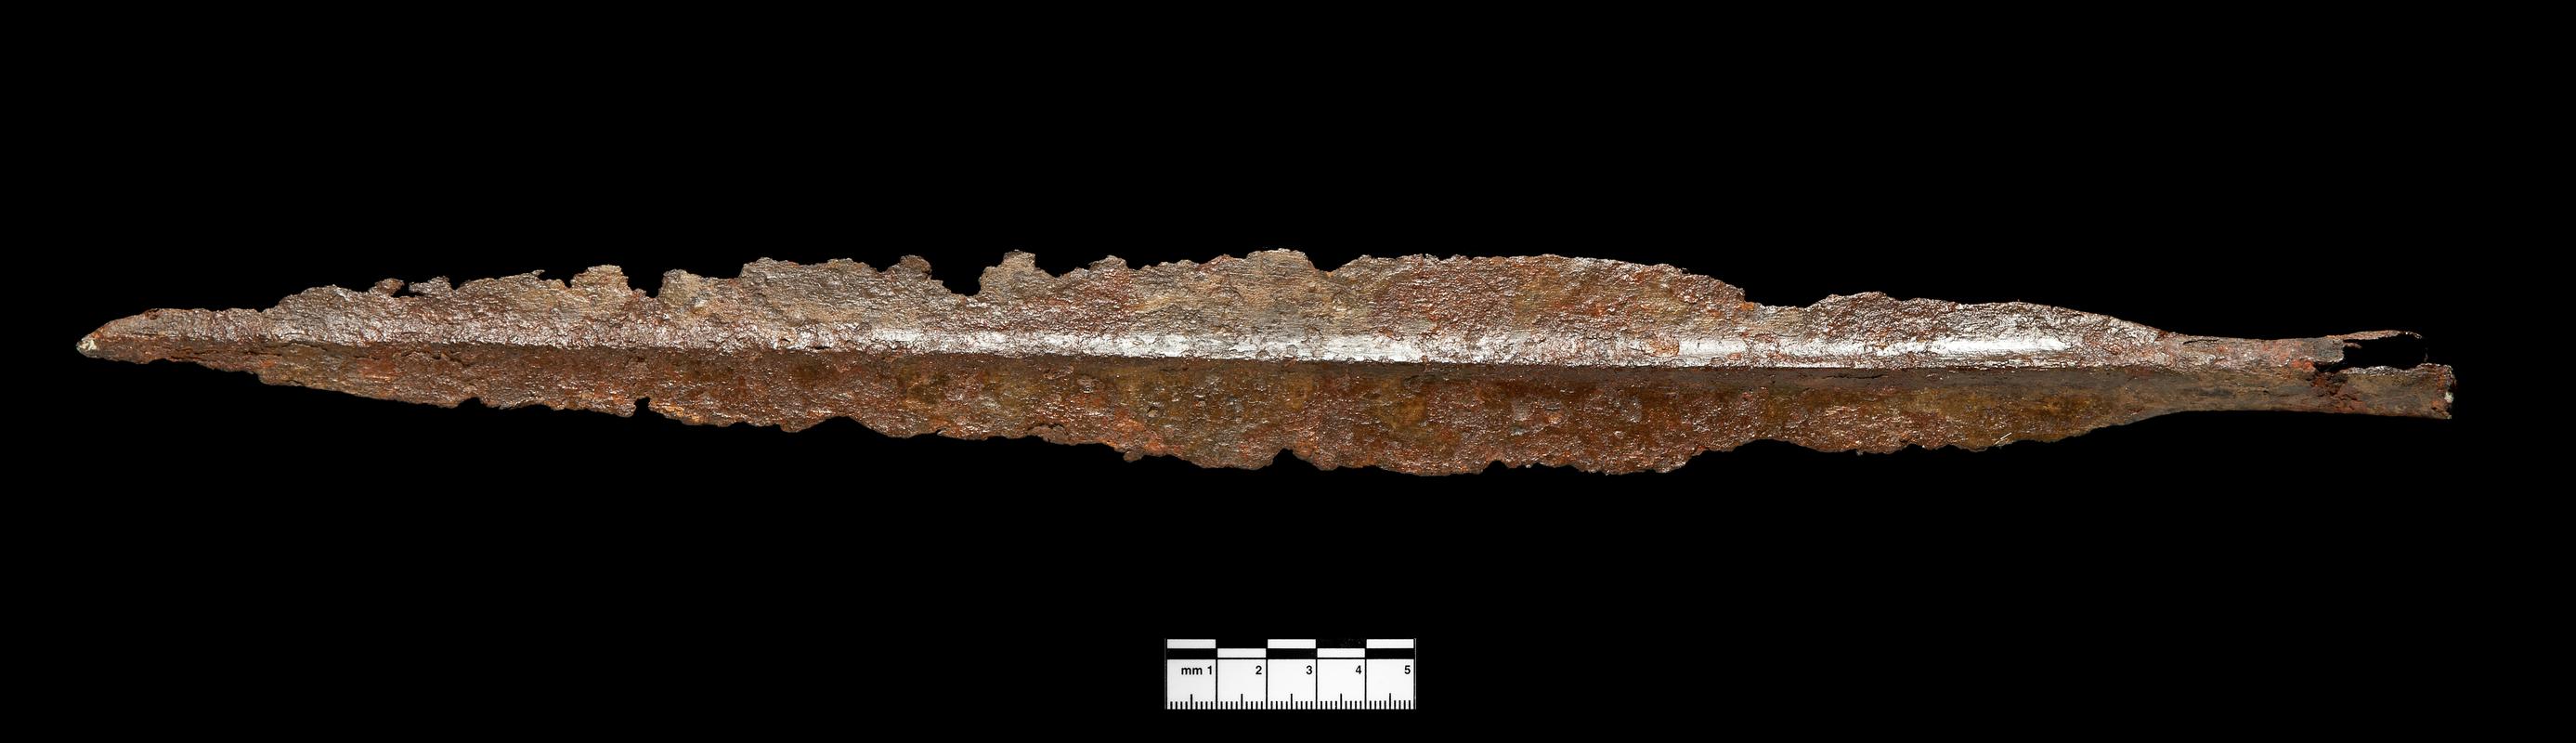 Iron Age iron spearhead